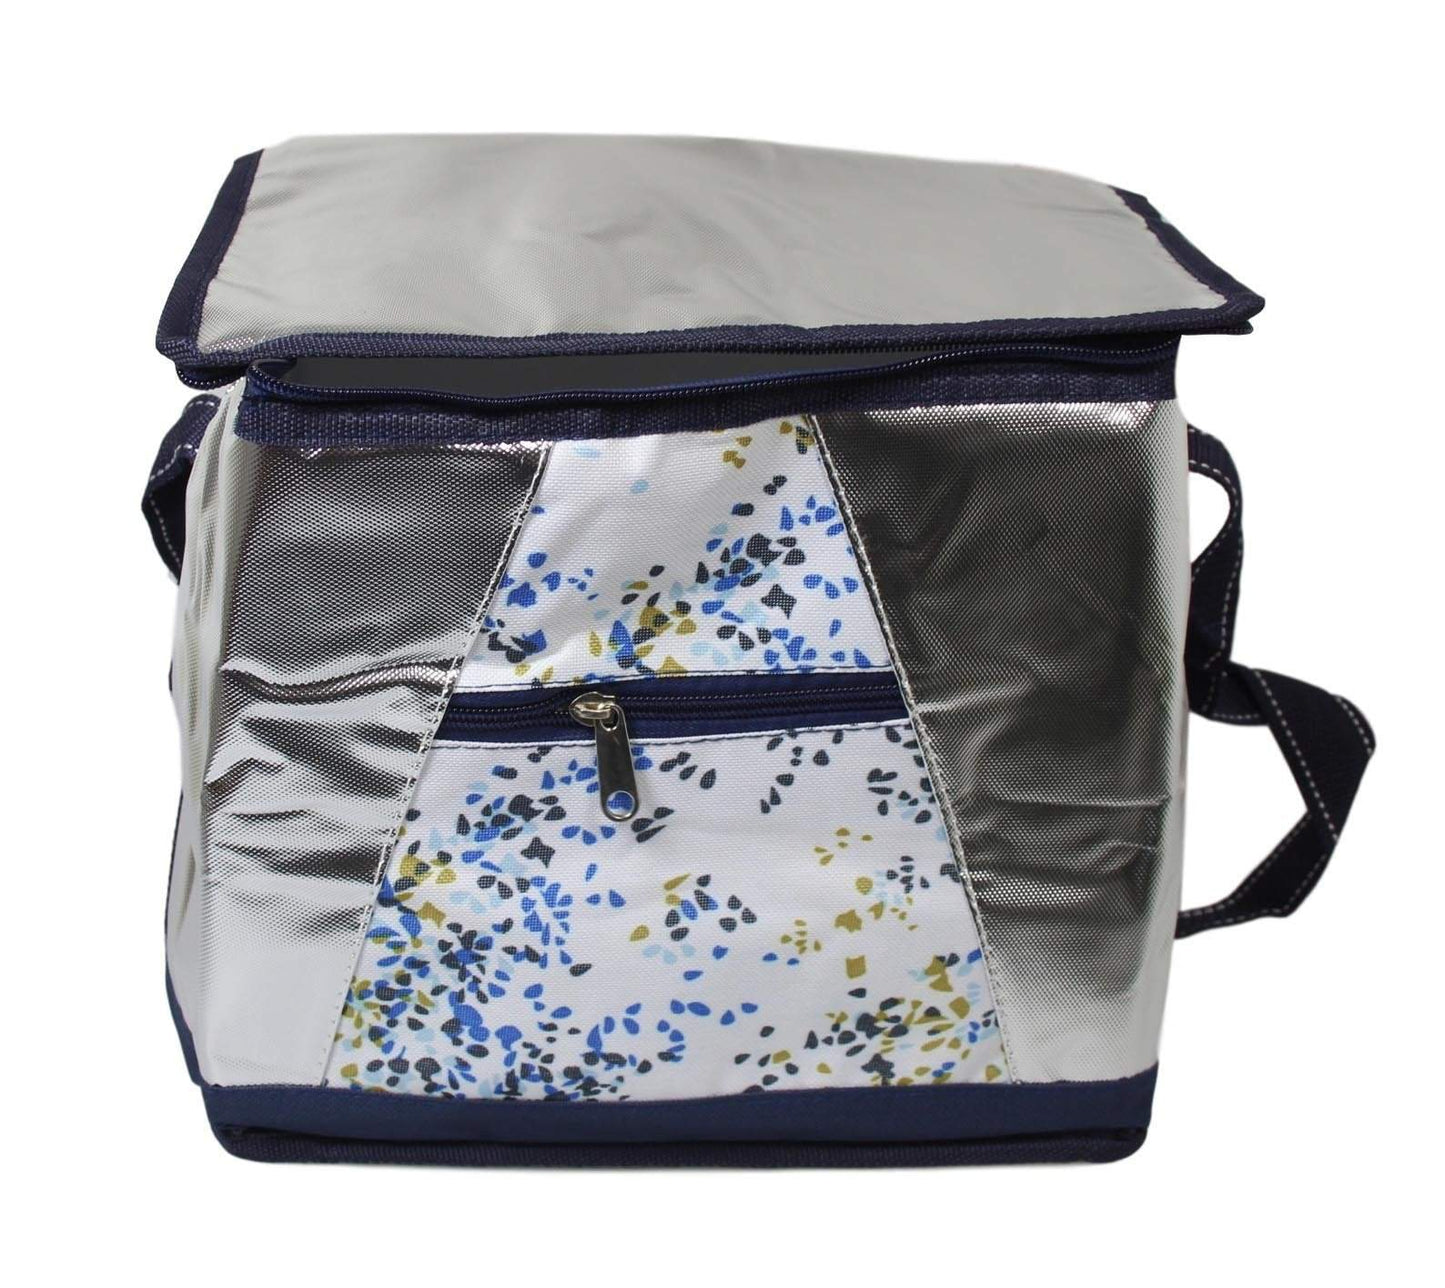 Cooling Bag 12 Litre Travel Picnic Accessory Bag Keep Food Drinks Cool 3526 (Parcel Rate)